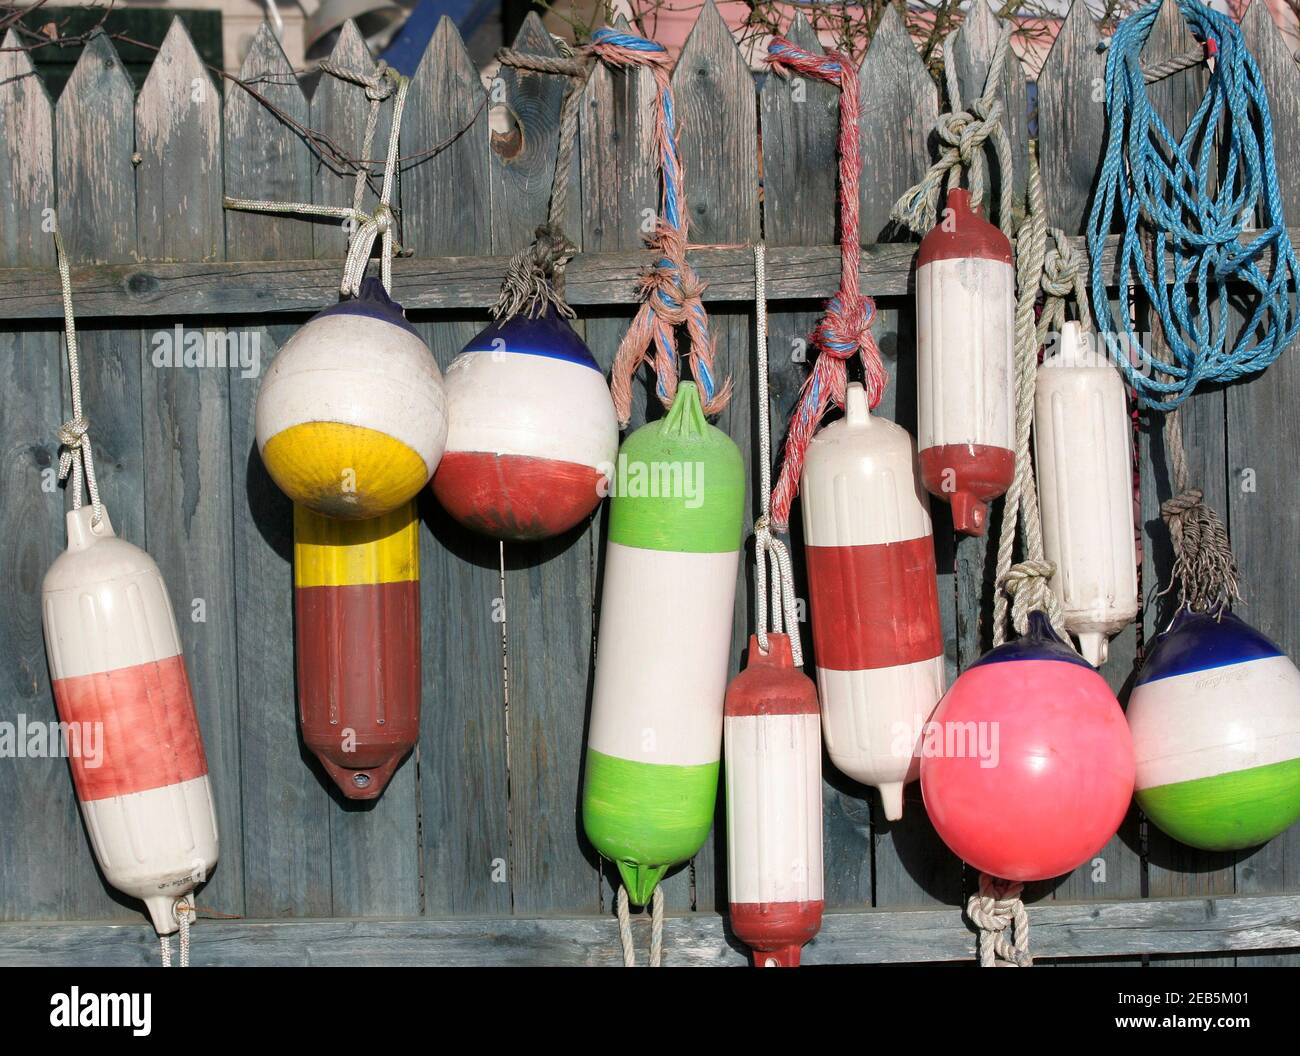 https://c8.alamy.com/comp/2EB5M01/colorful-plastic-buoys-hanged-to-fence-to-dry-2EB5M01.jpg